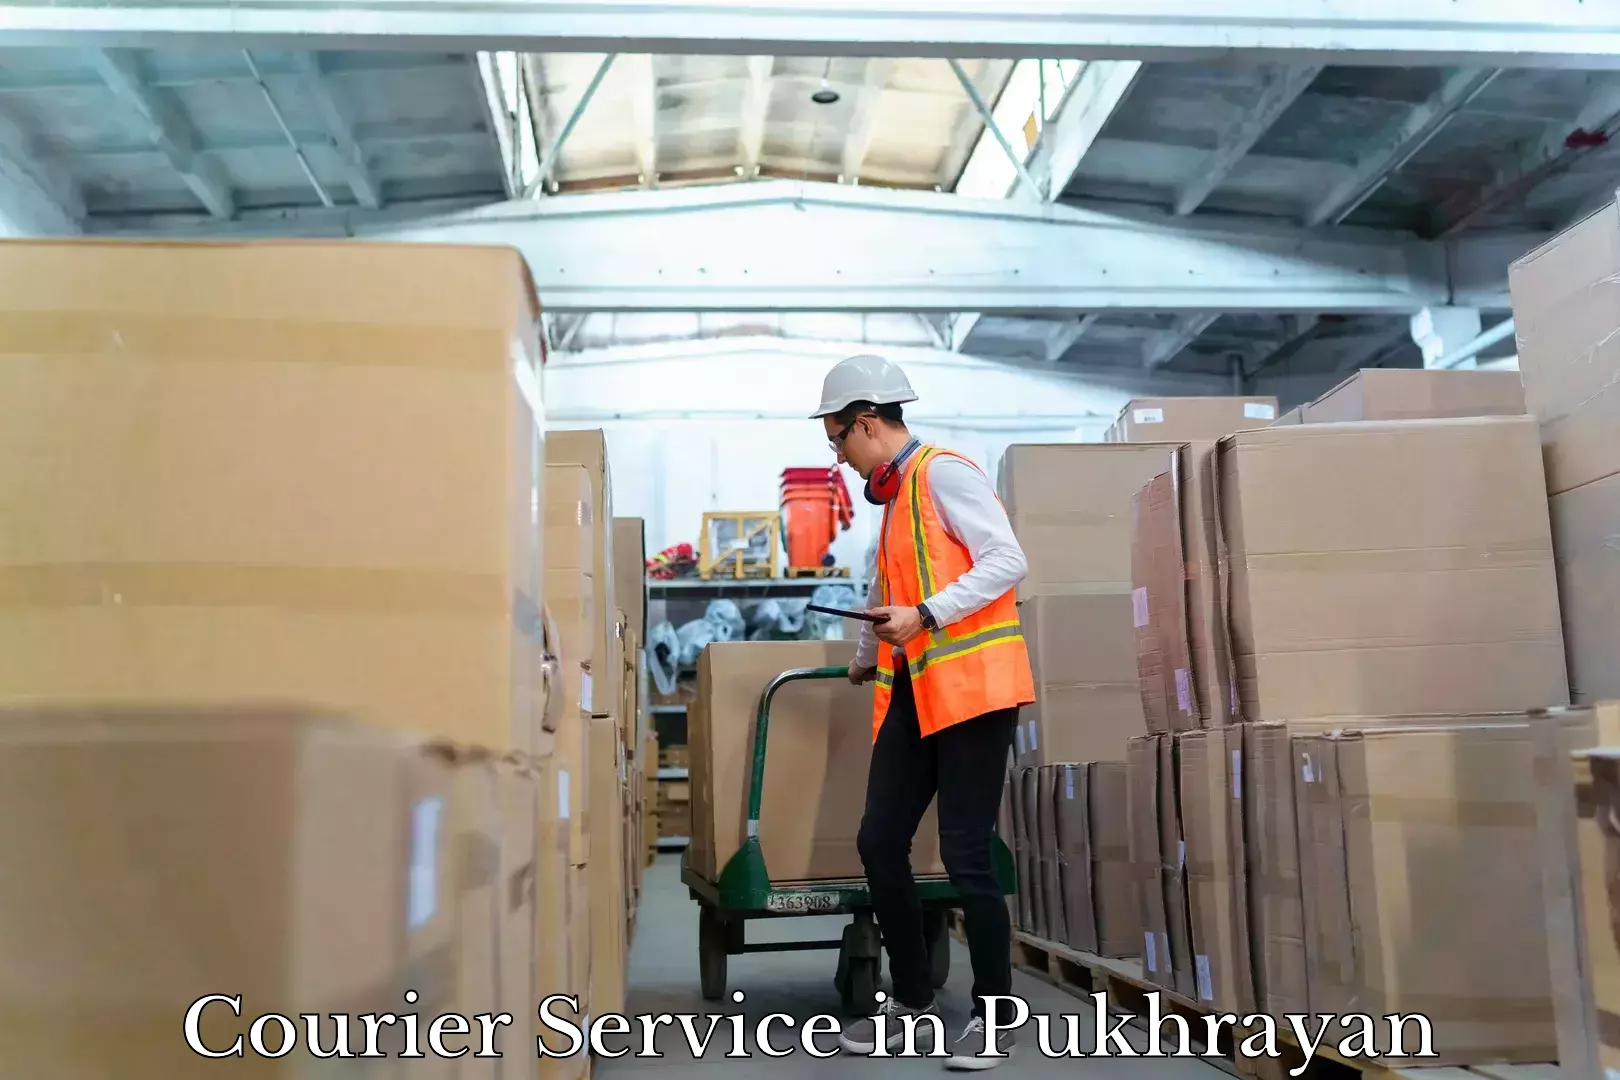 Streamlined logistics management in Pukhrayan